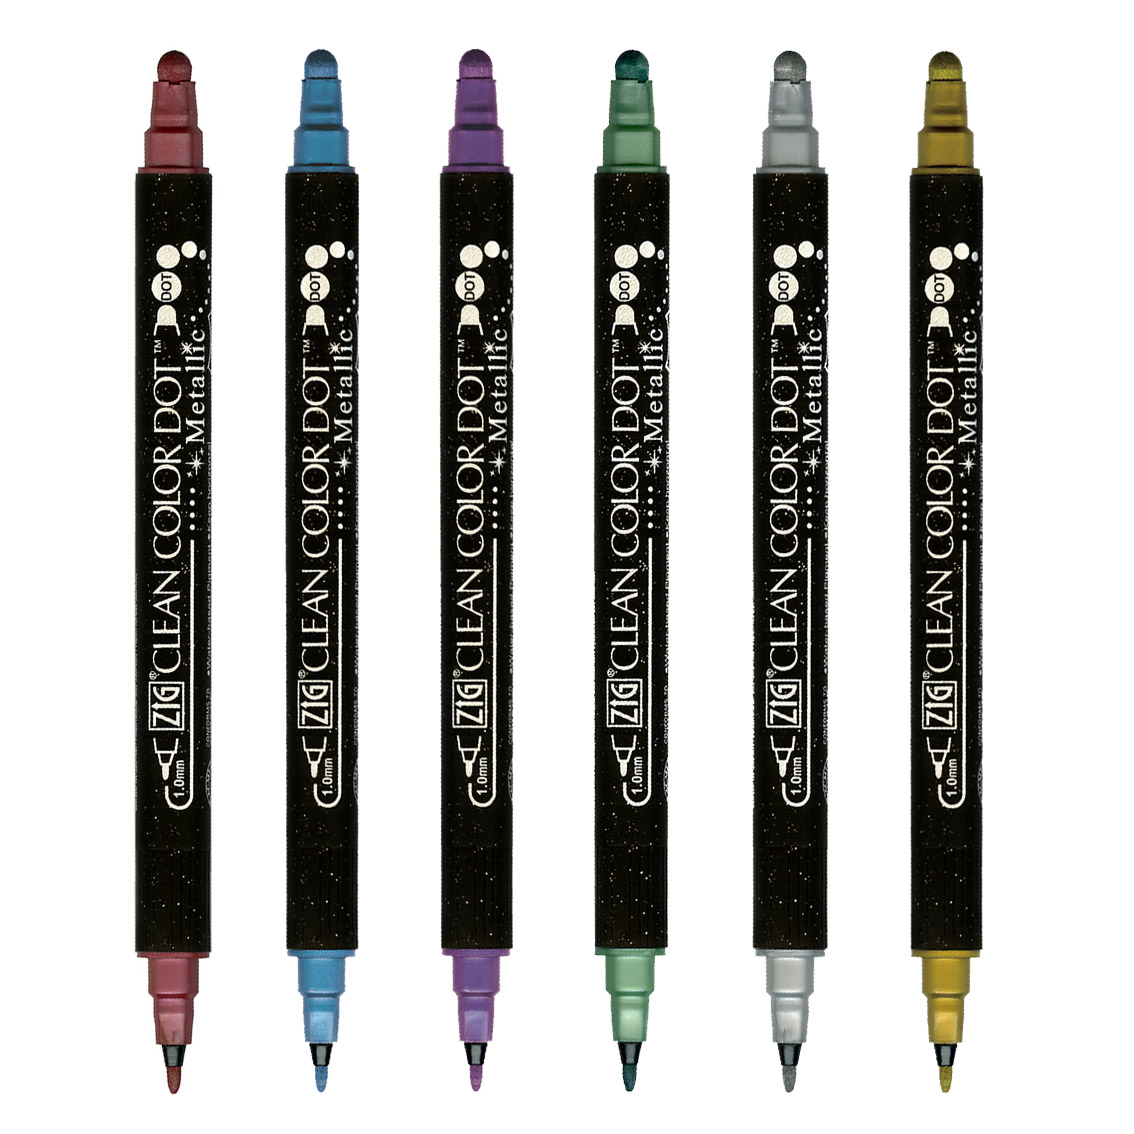 Clean Color DOT Pen Metallic 6-set in the group Pens / Artist Pens / Illustration Markers at Pen Store (125134)